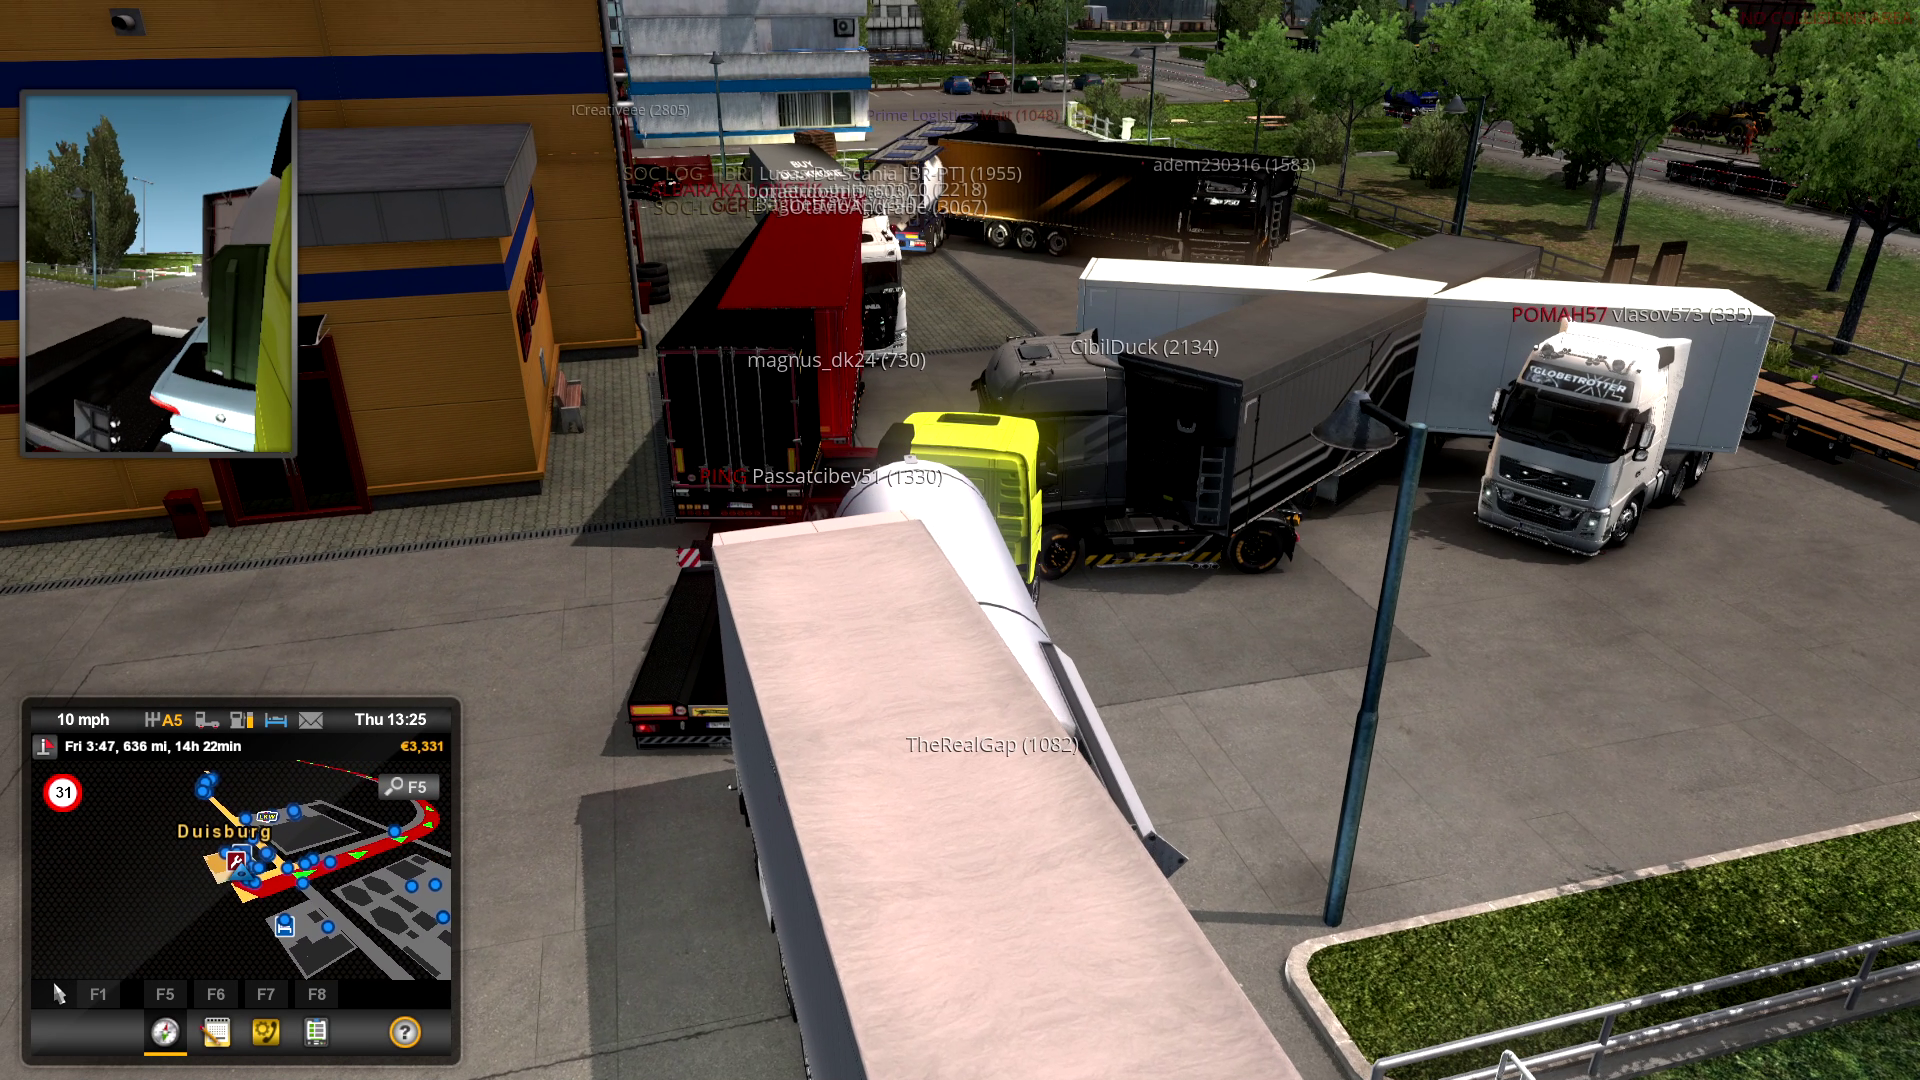 game euro truck simulator 2 gold edition pc